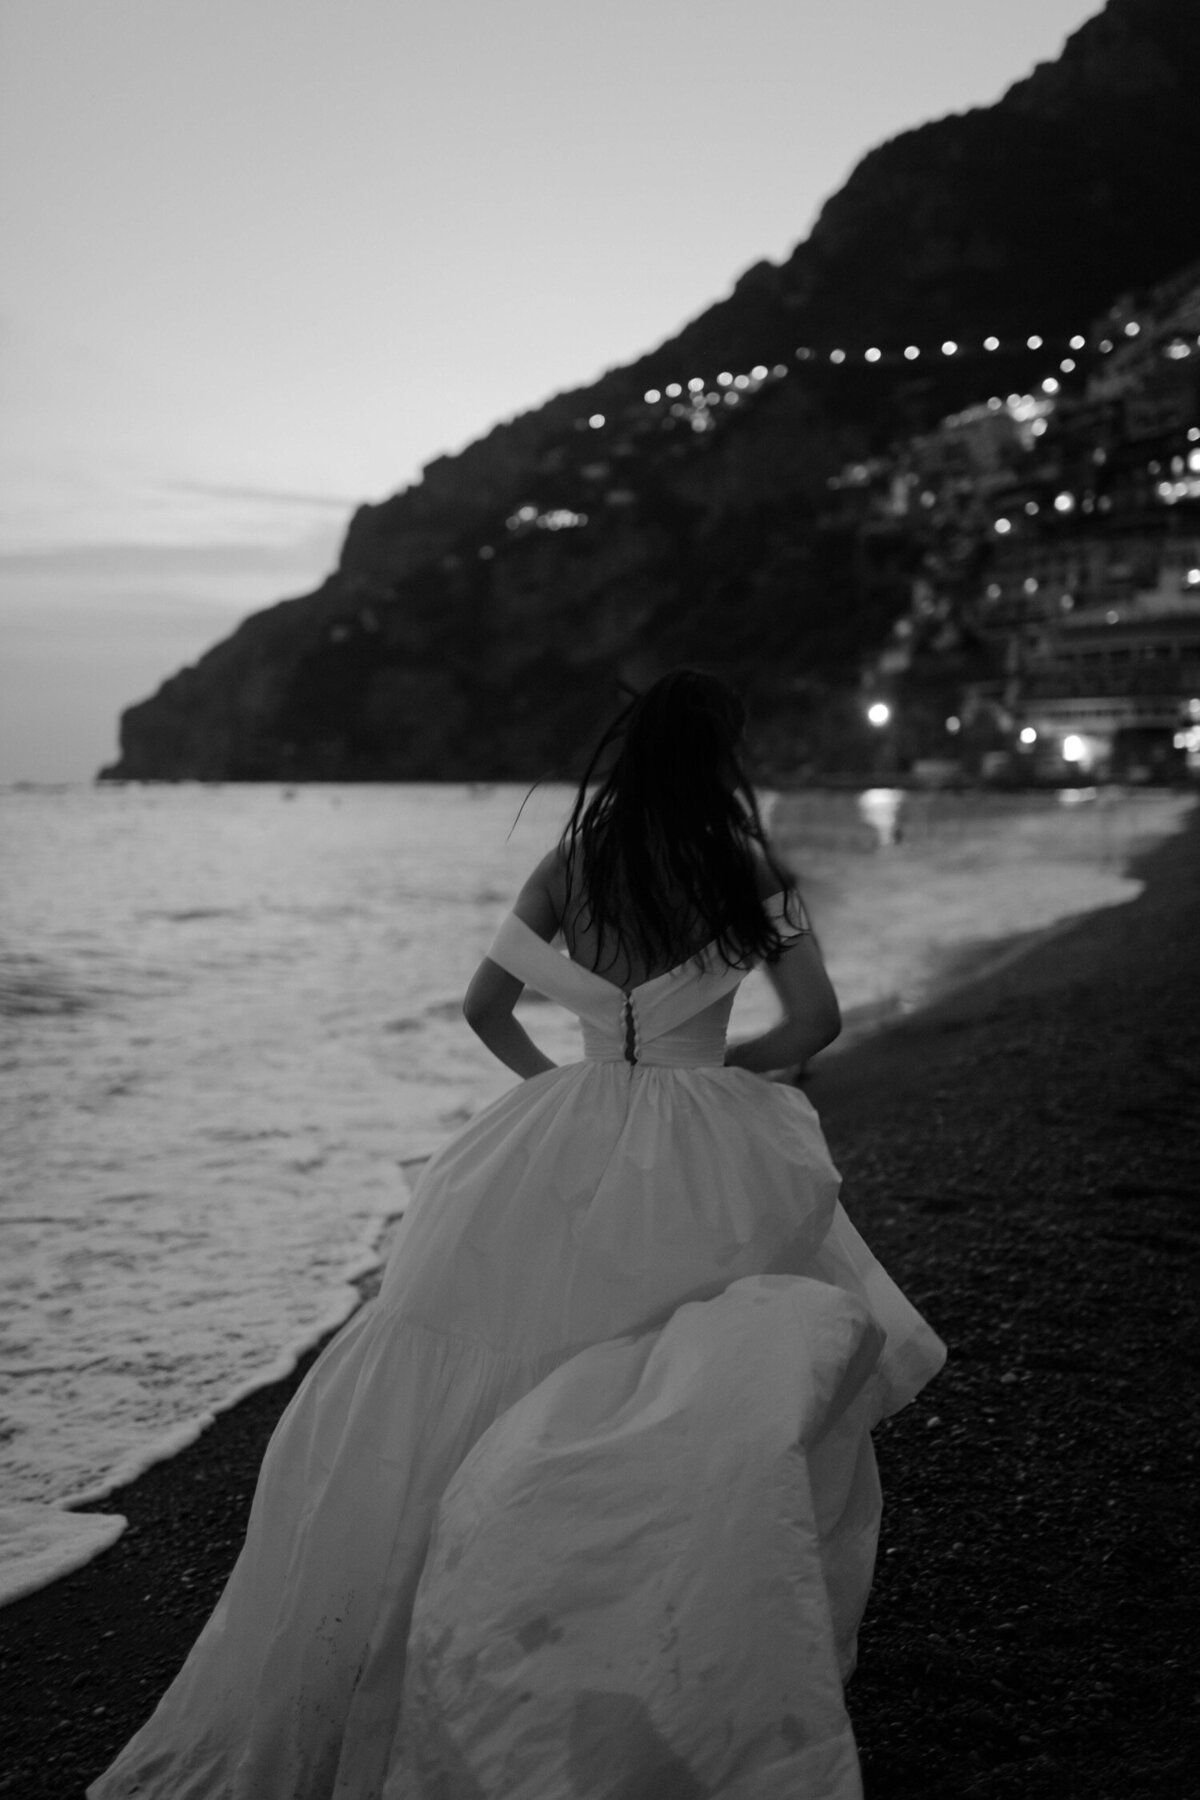 098_Flora_And_Grace_Positano_Elopement_Weding_Photographer-408_Luxury Elopement Photographer at the Amalfi Coast in Positano. An intimate wedding captured by Vogue published photographer Flora and Grace.